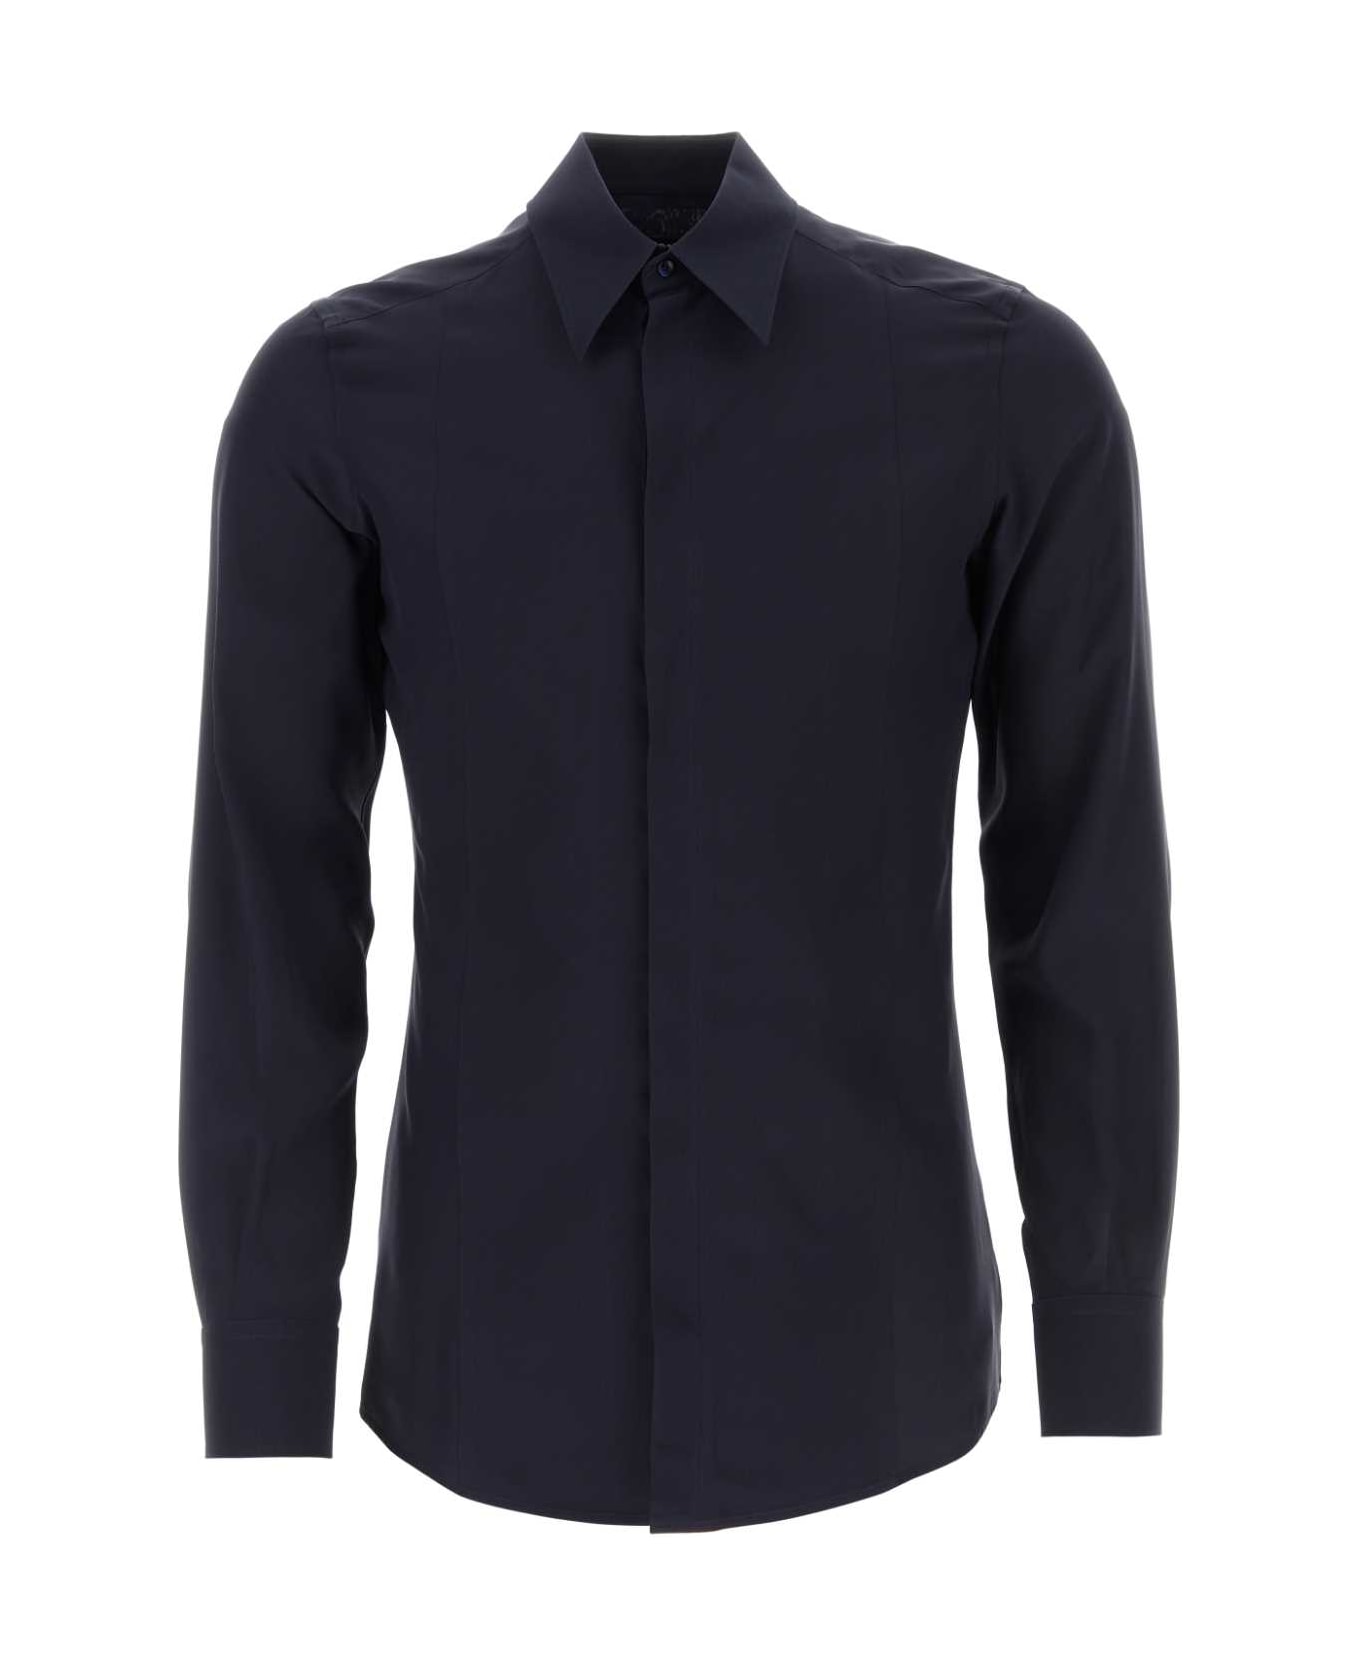 Dolce & Gabbana Midnight Blue Crepe Shirt - BLUSCURISSIMO5